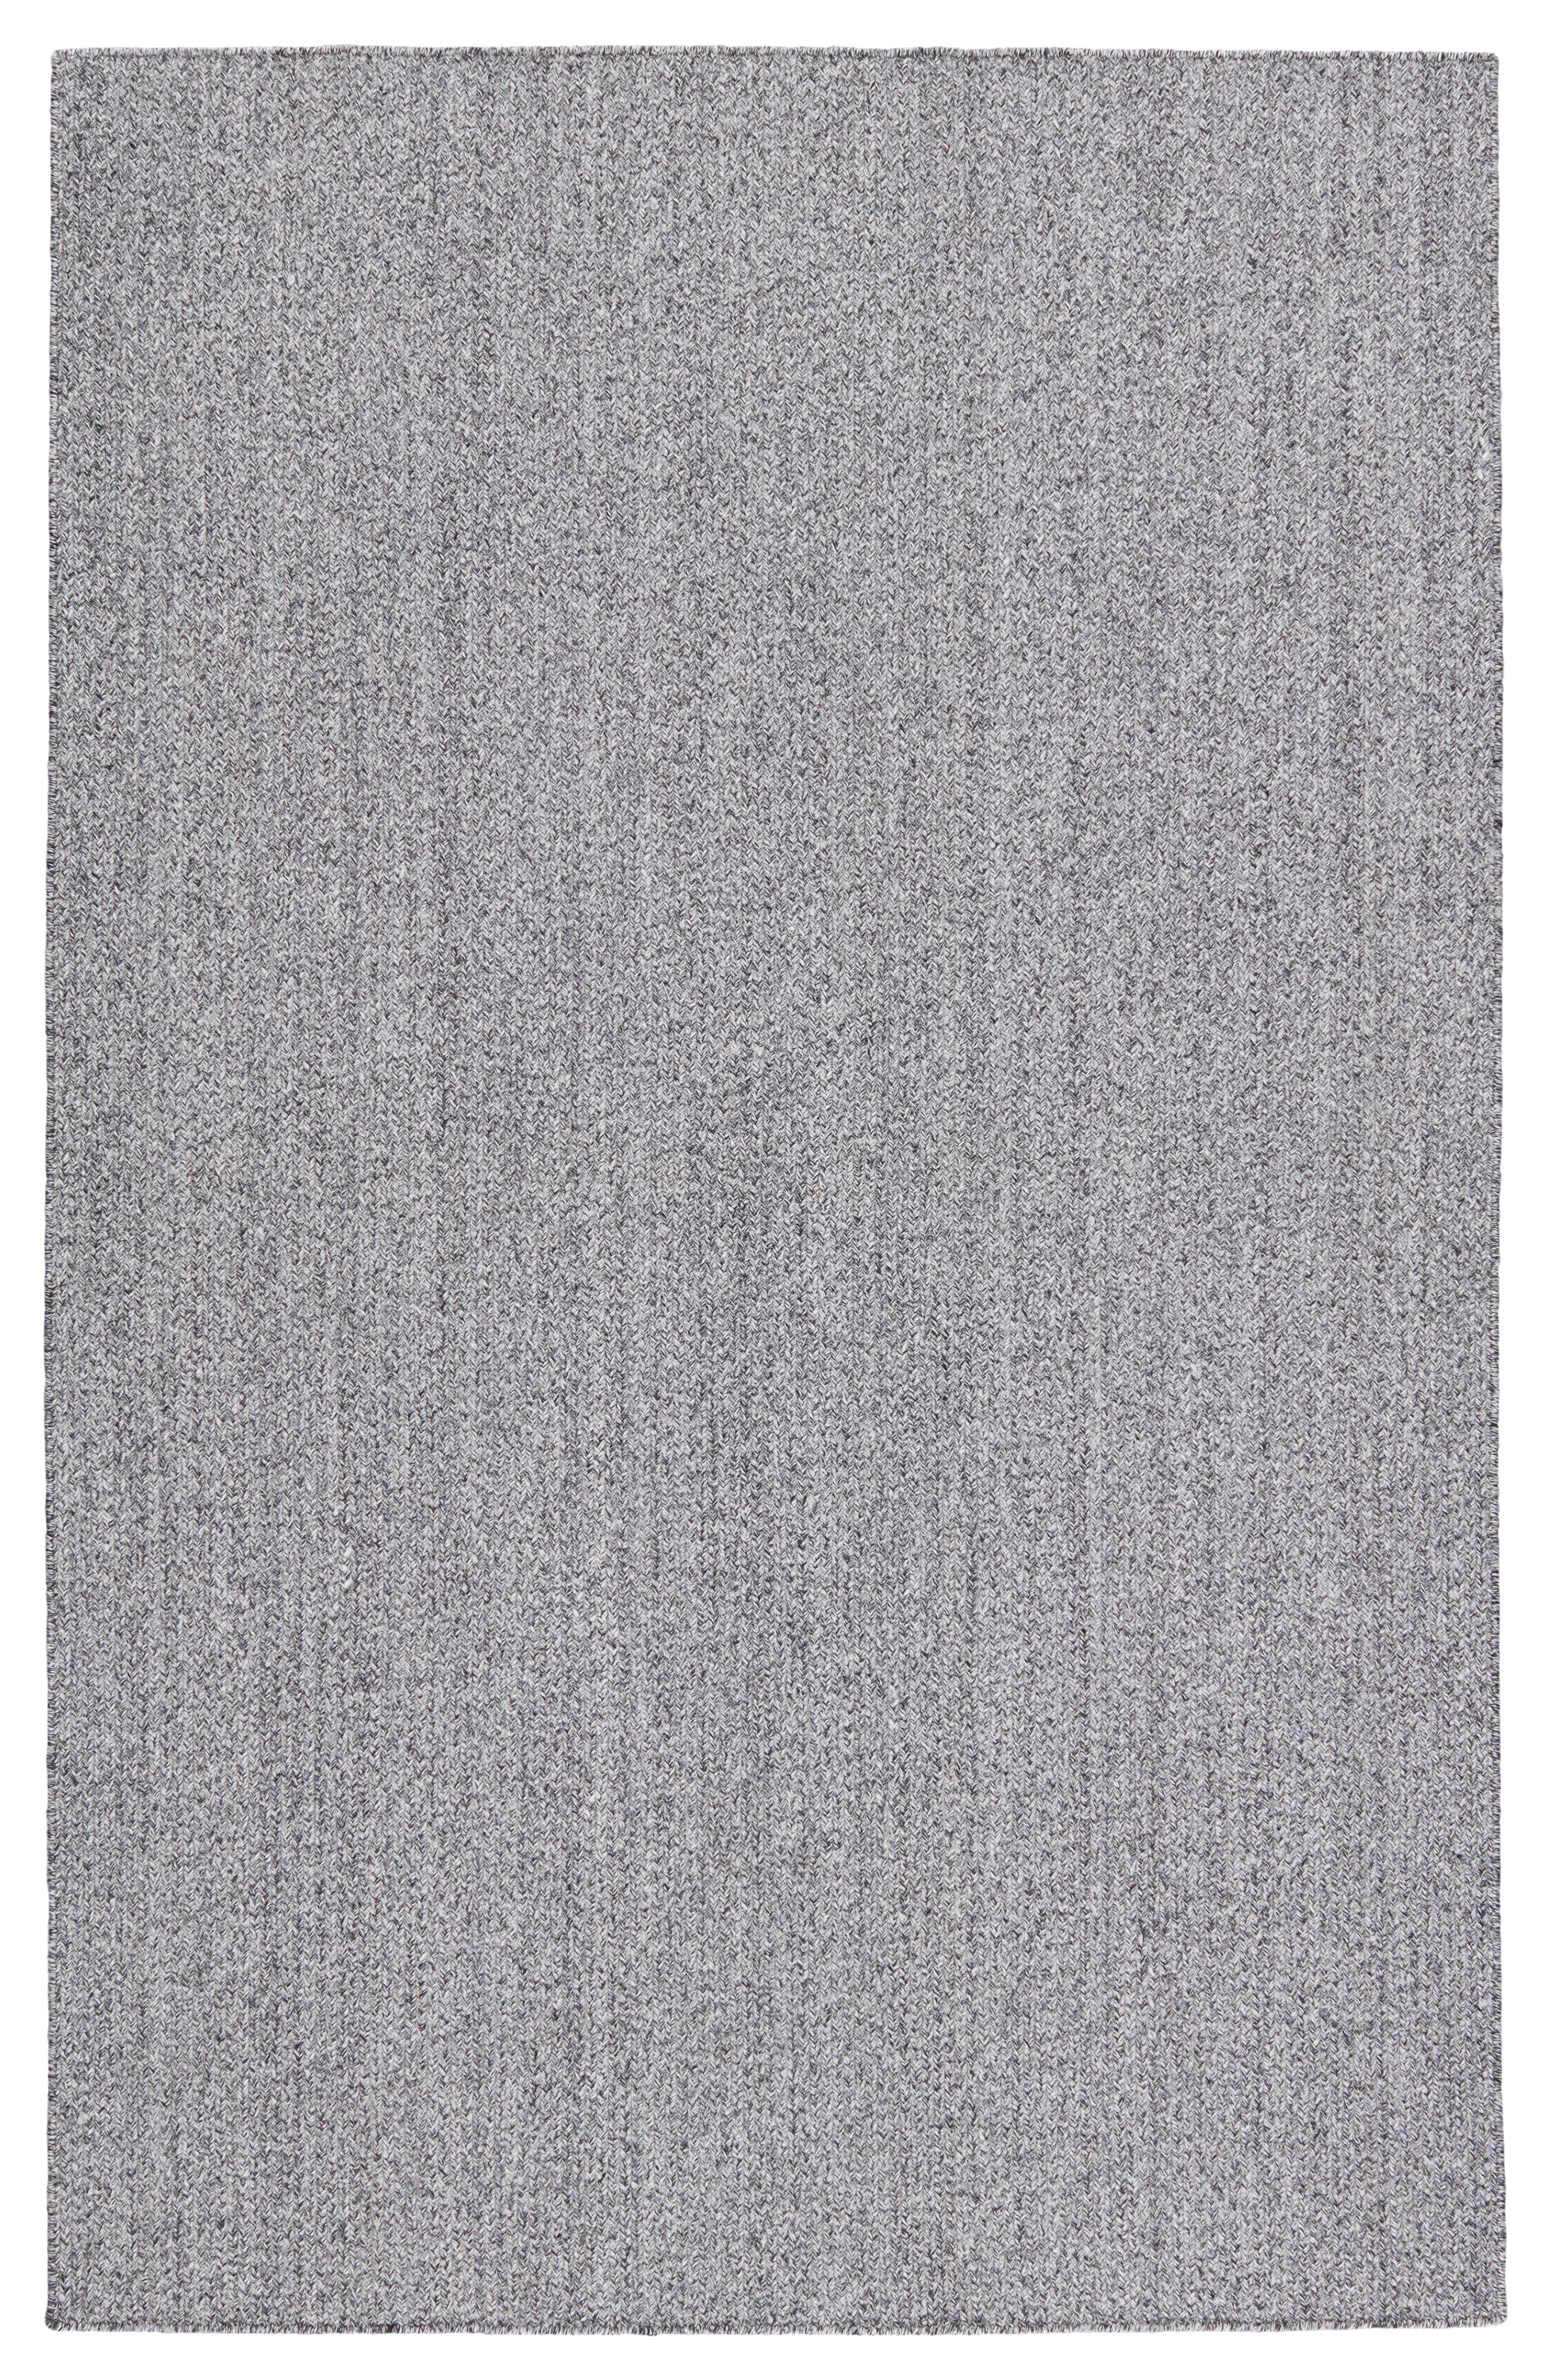 Maracay Indoor/ Outdoor Solid Black/ White Area Rug (5'X8') - Image 0